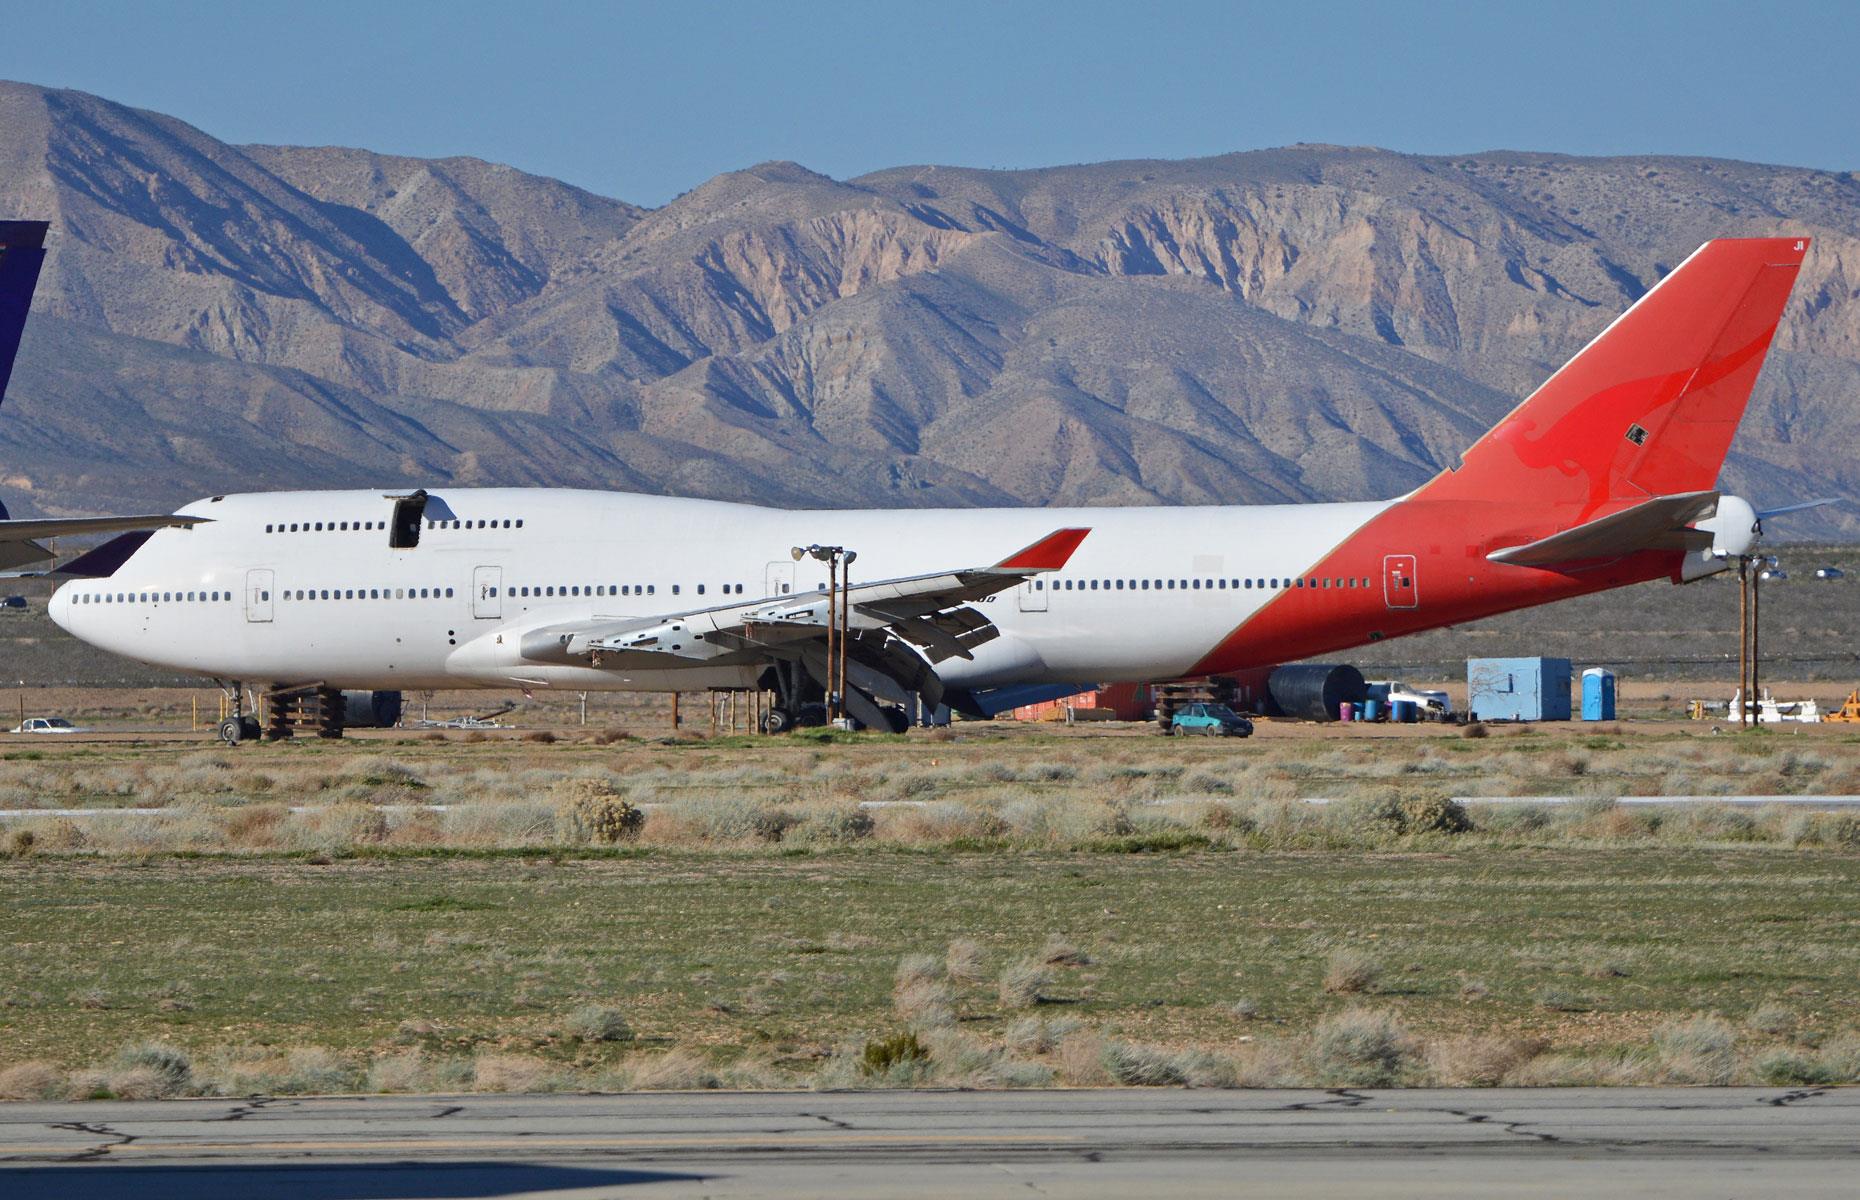 Mojave Air and Space Port, California, USA